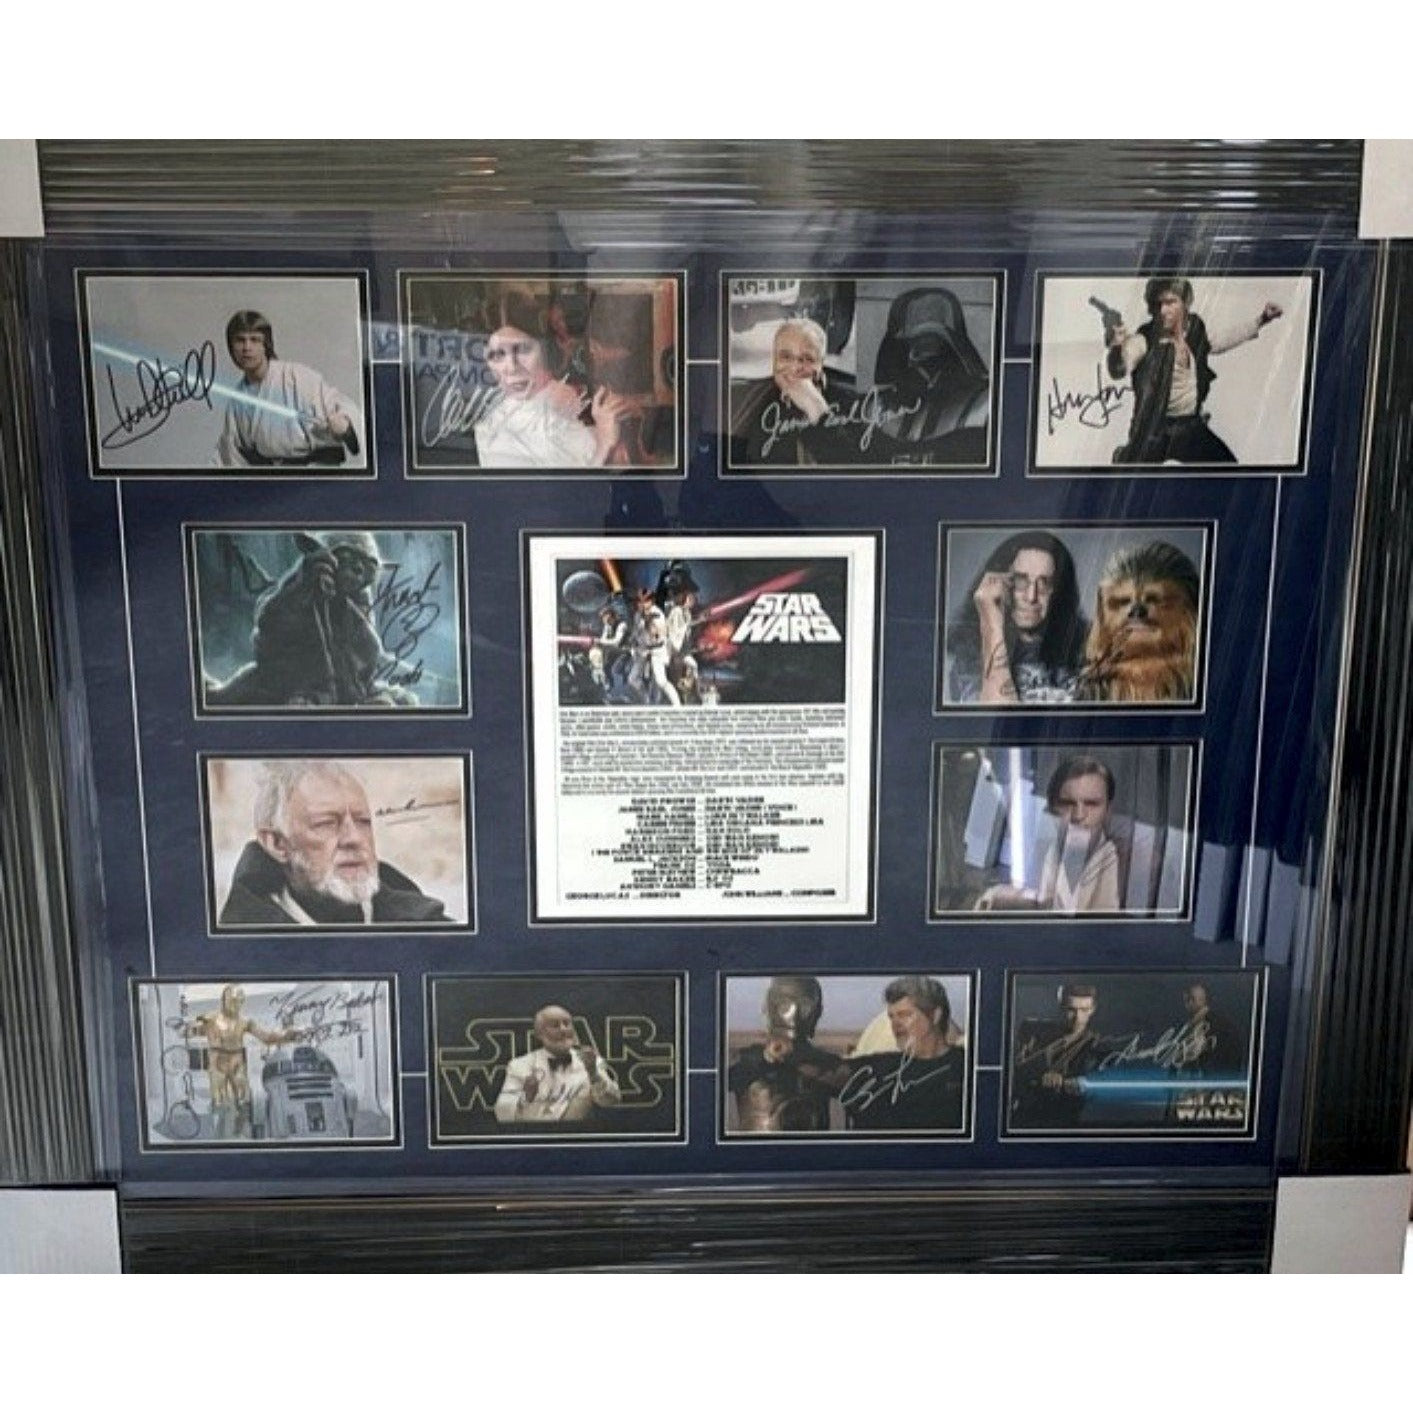 Alec Guinness Obi-Wan Kenobi Star Wars 5 x 7 photo signed